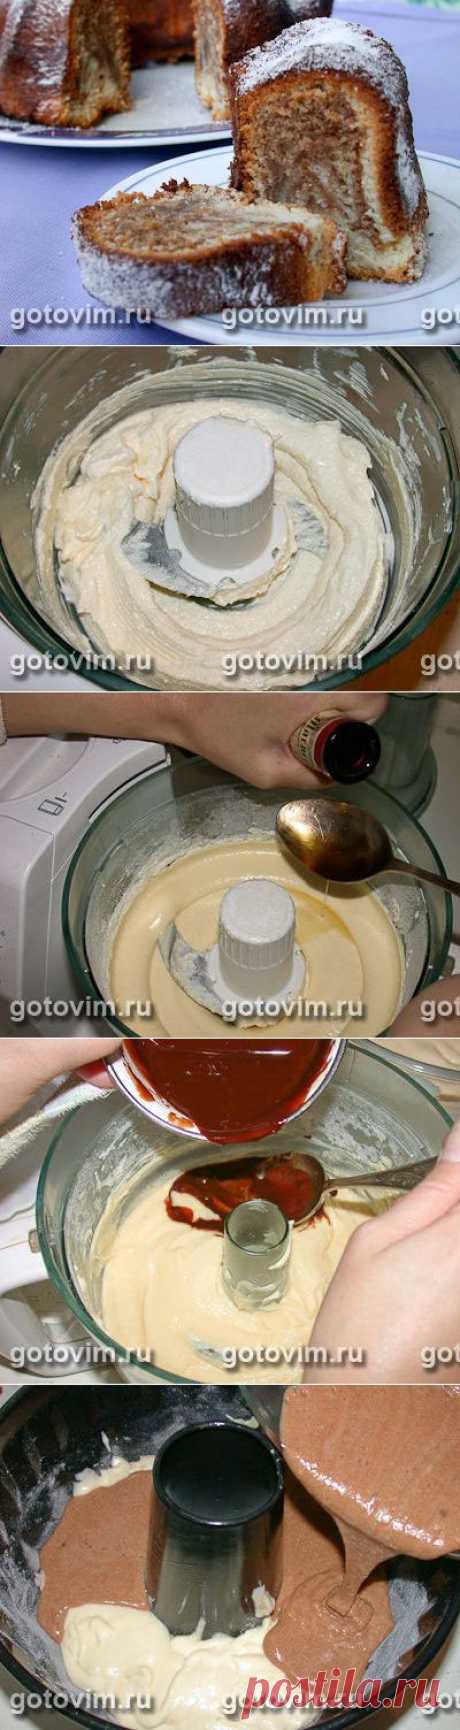 Мраморный кекс. Фото-рецепт / Готовим.РУ